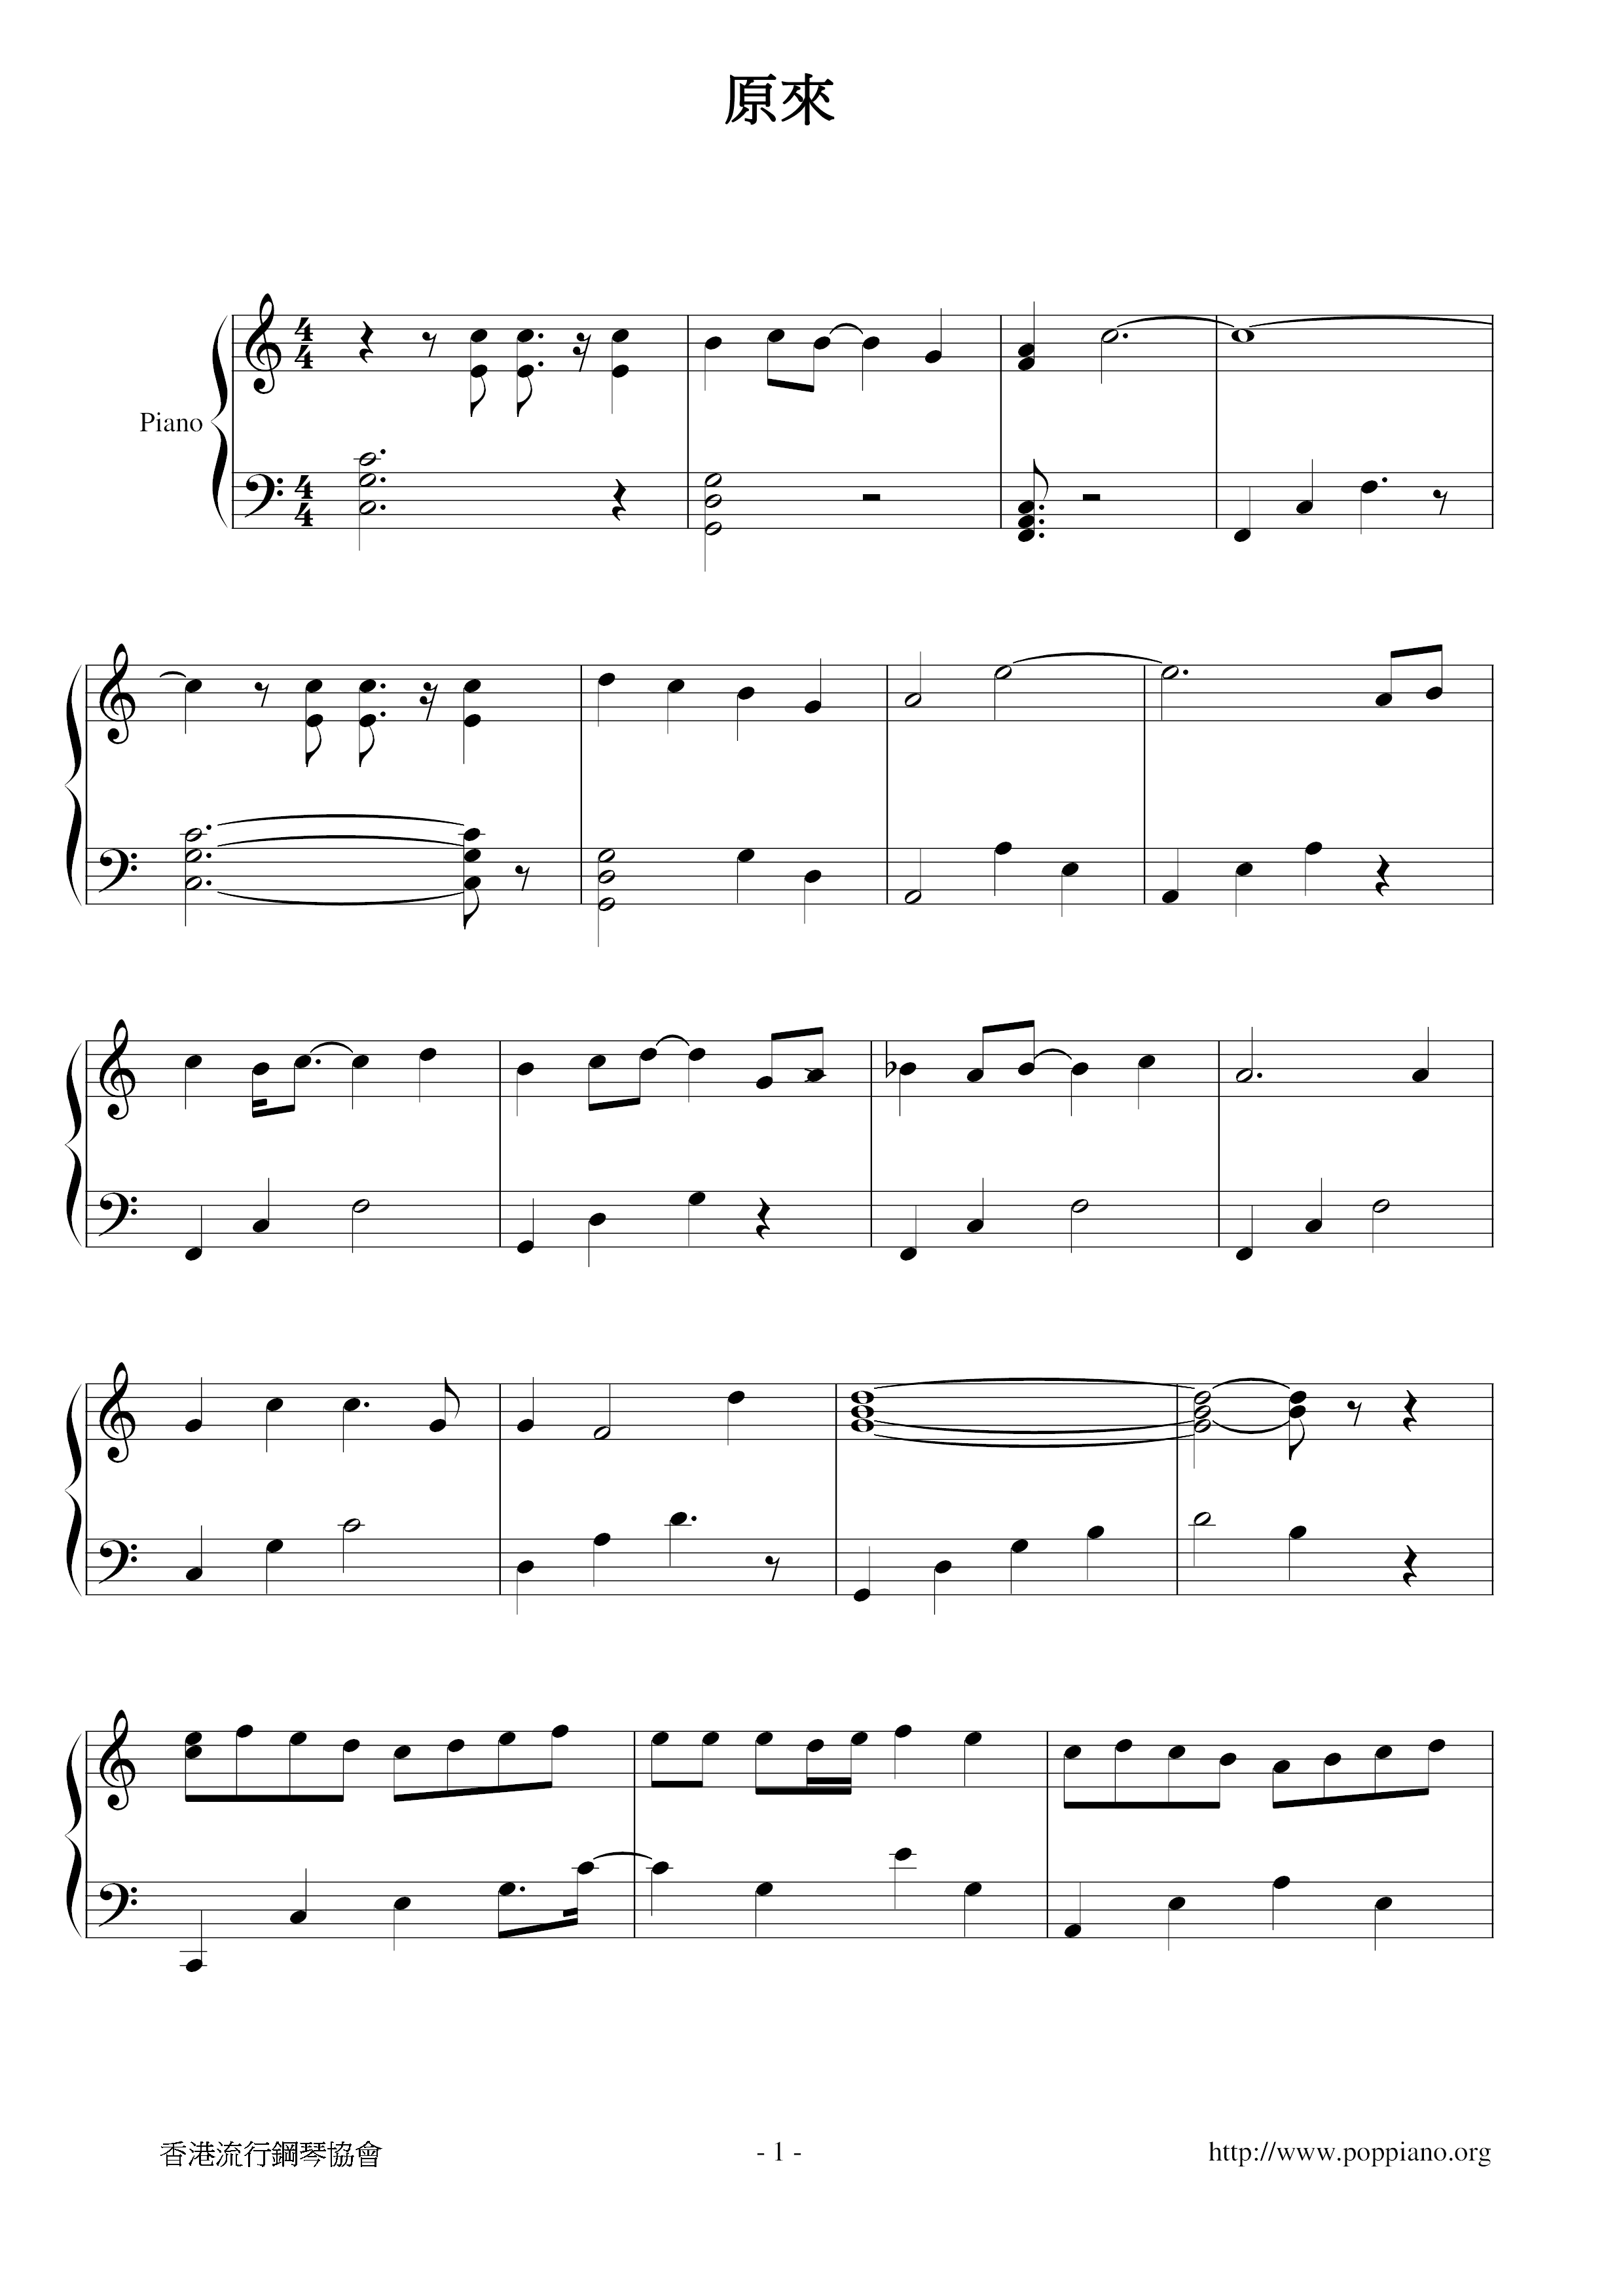 Originally Score